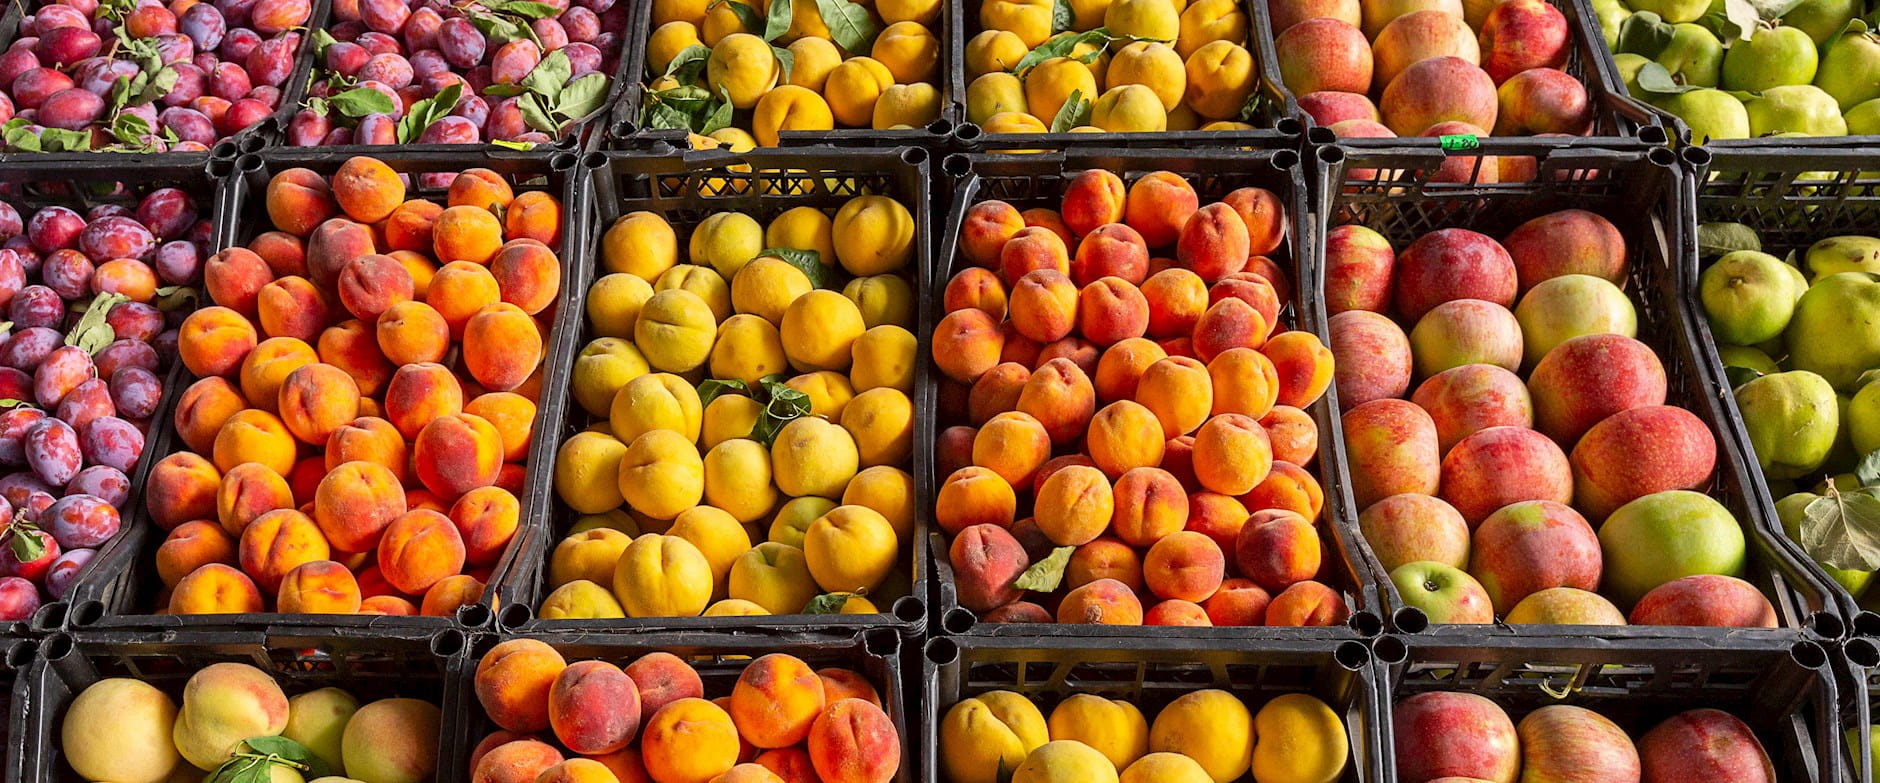 High angle shot of various fruits in bins at a market